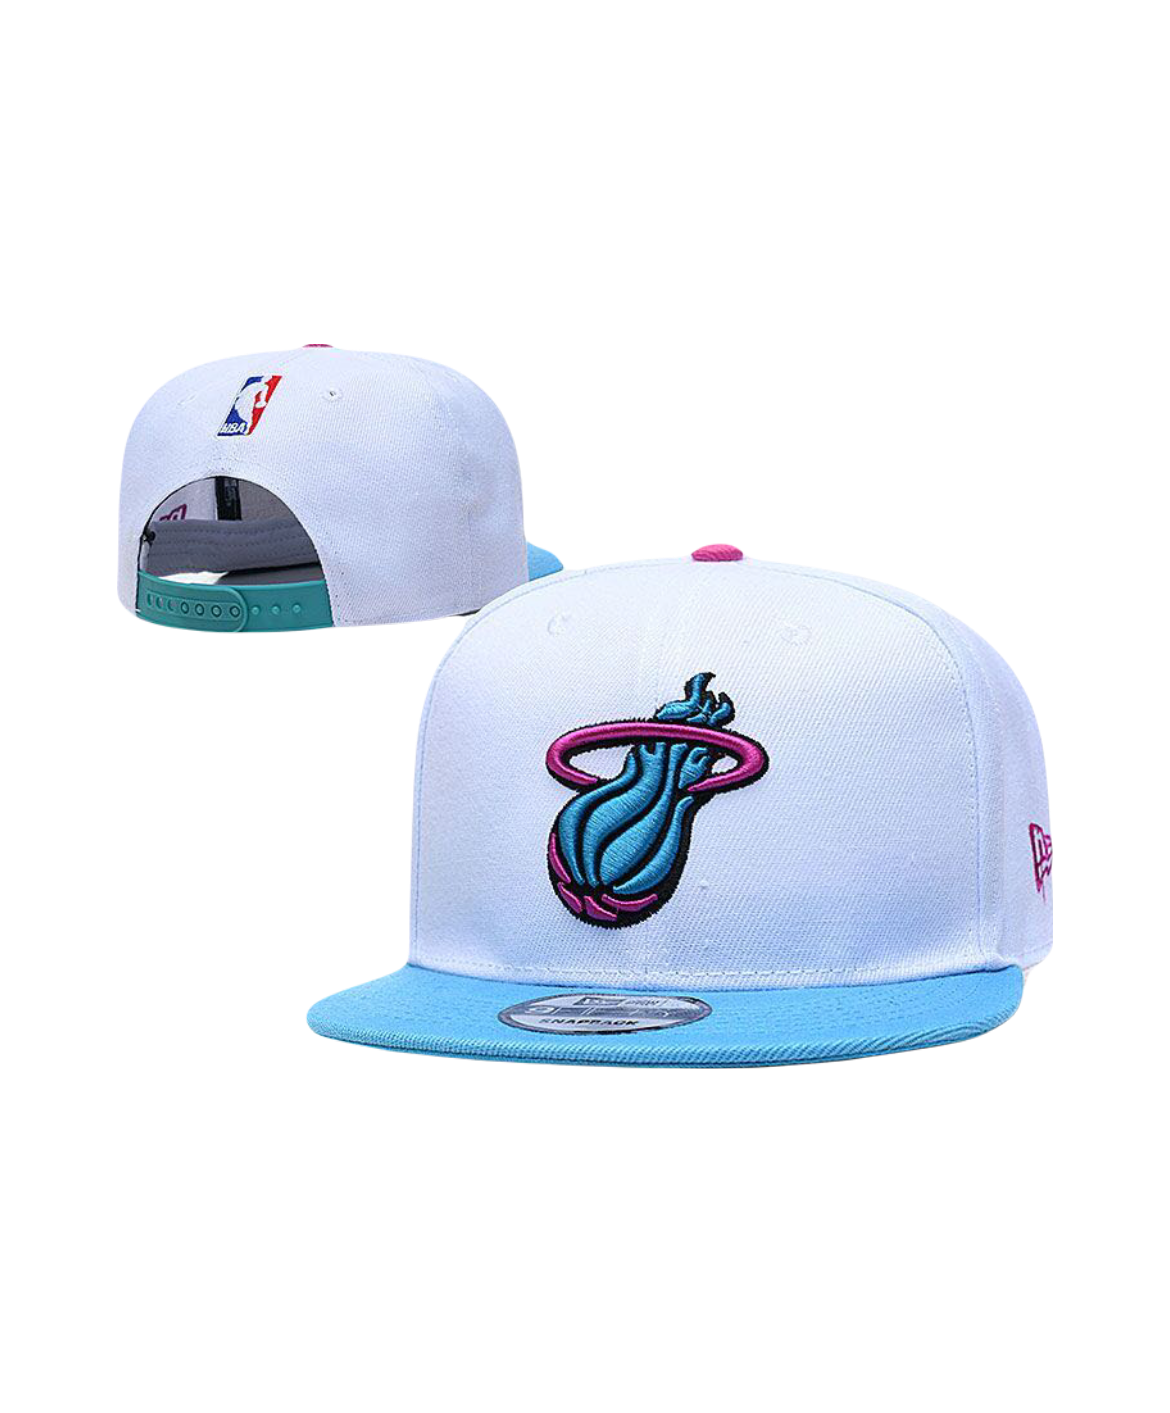 Miami Heat Vice City NBA New Era White Snapback Hat